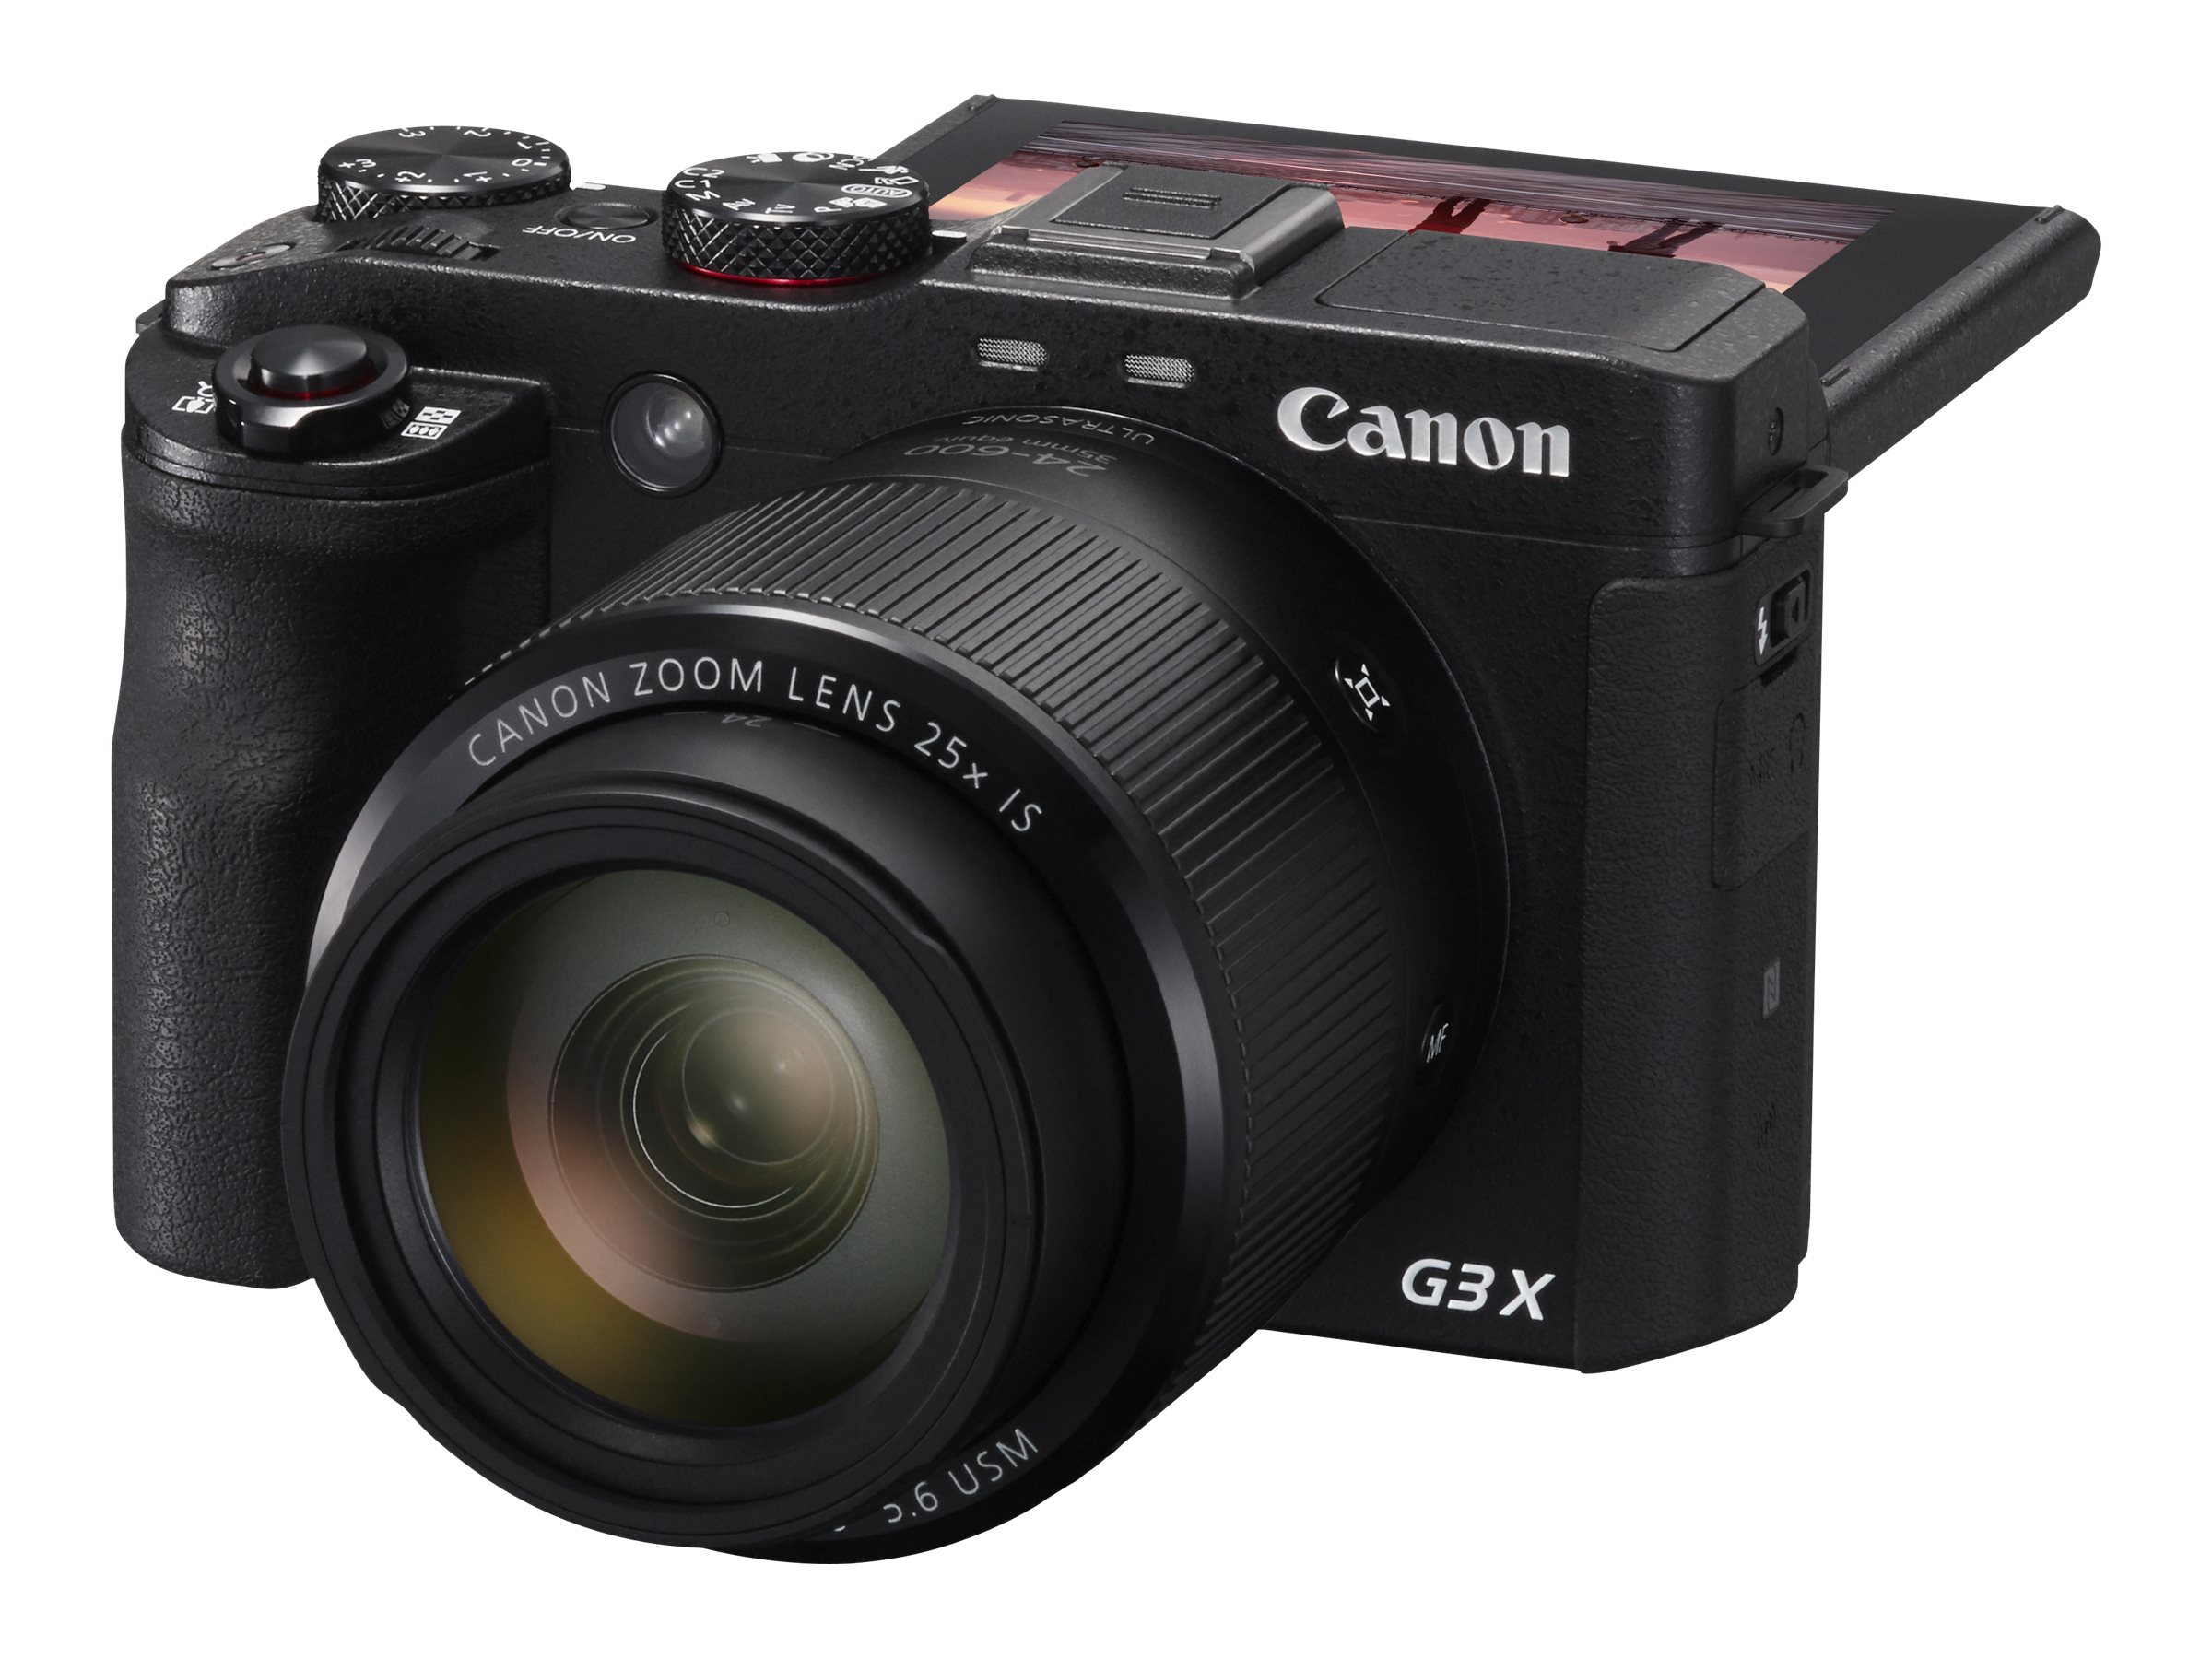 Canon PowerShot G3 X - Digital camera - compact - 20.2 MP - 1080p - 25x optical zoom - Wi-Fi, NFC - image 4 of 15